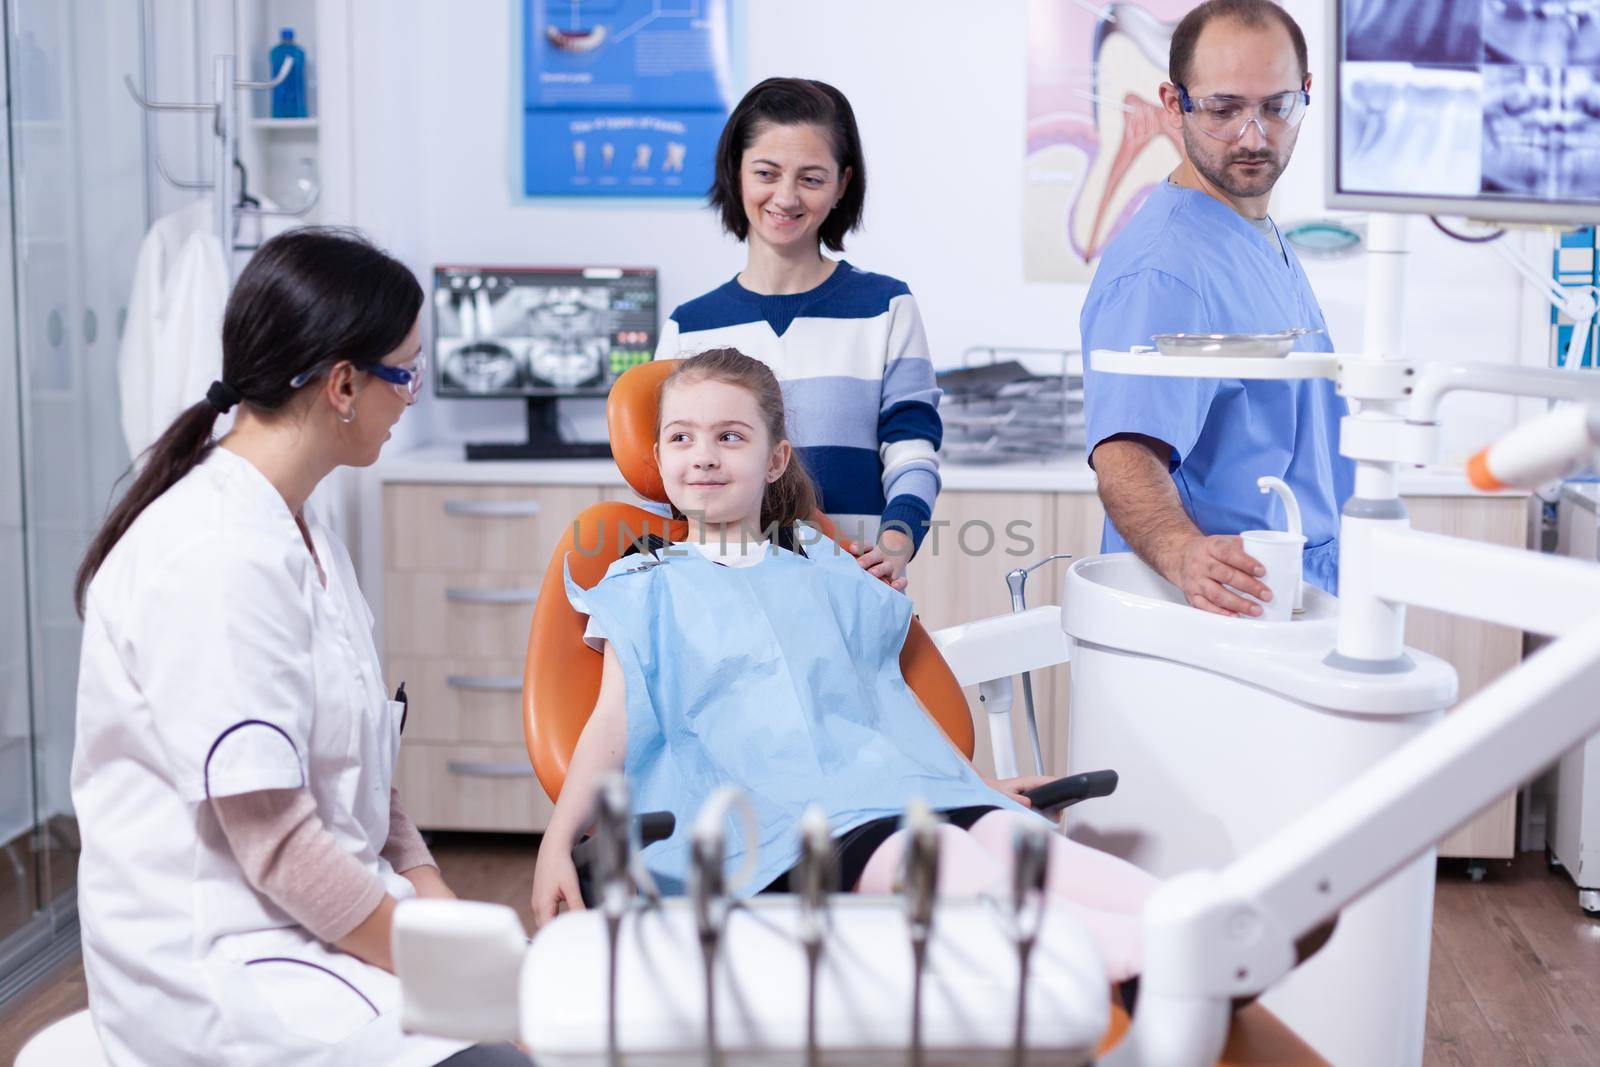 Happy little girl at pediatric dentist wearing dental bib by DCStudio